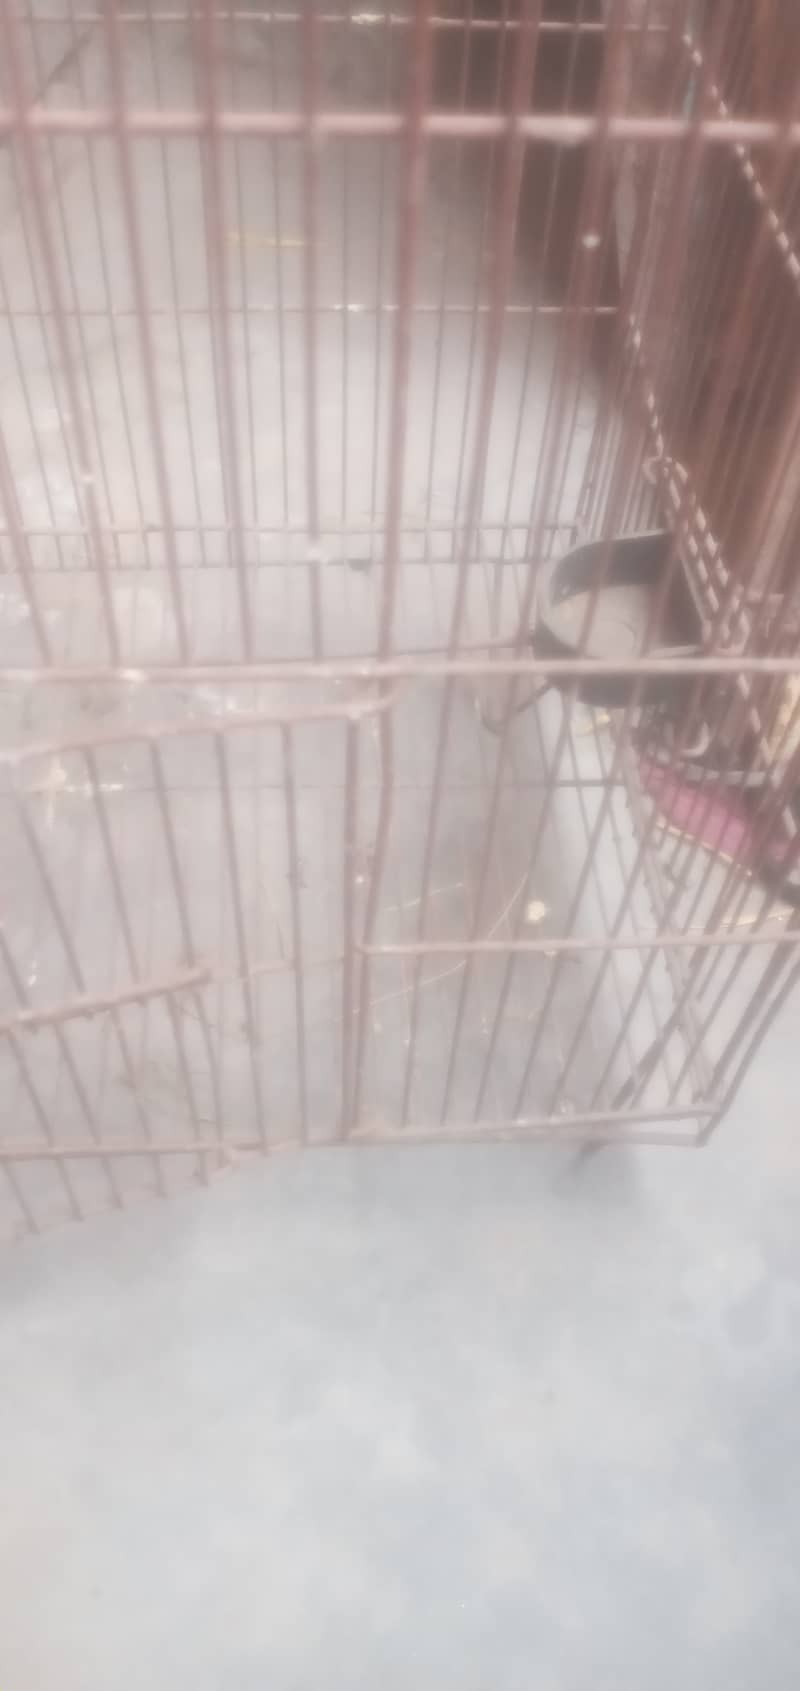 Iran Cage Strorng Net For Birds 11